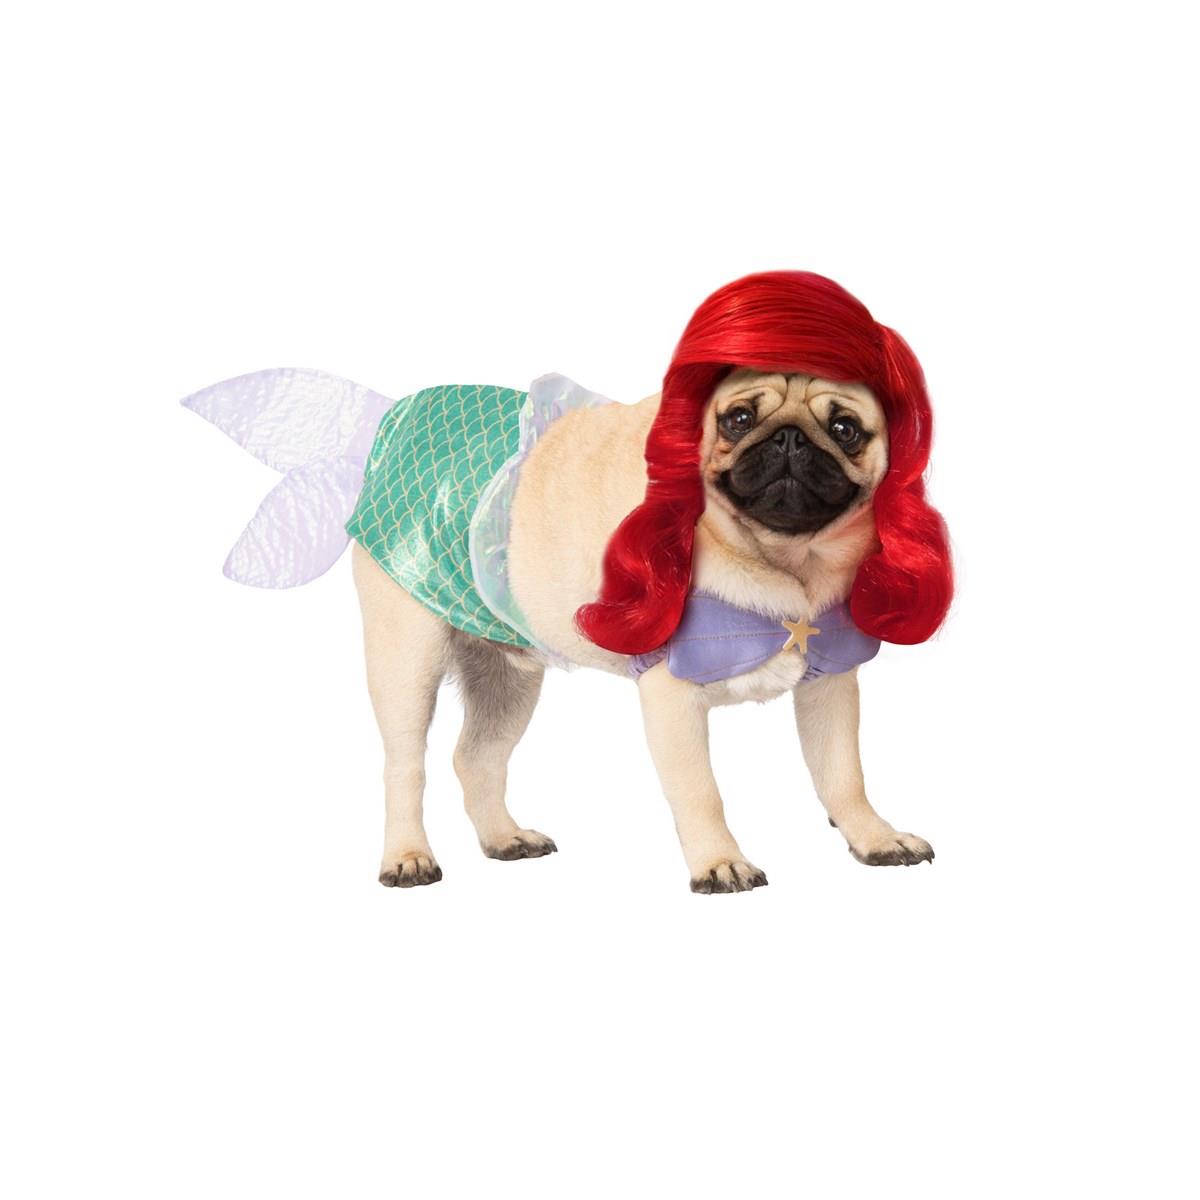 283943 Ariel Pet Costume, Small 11